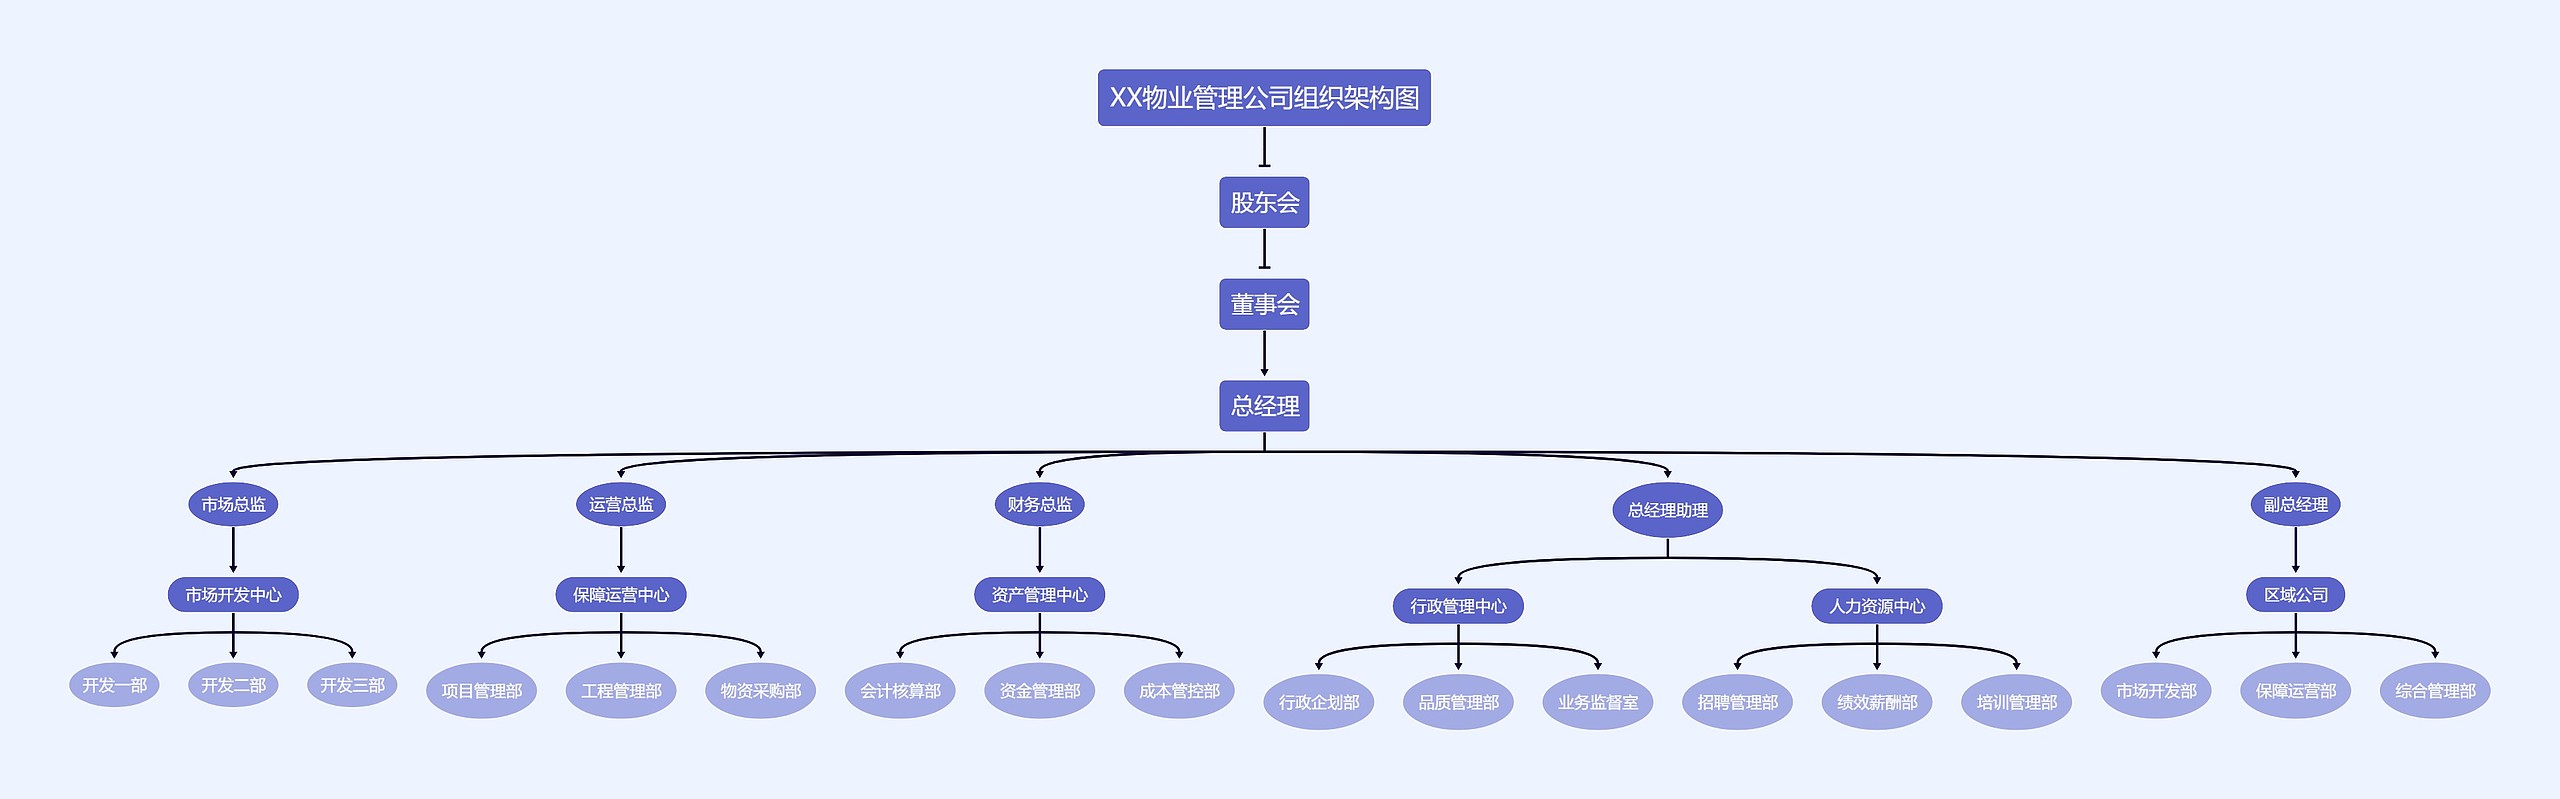 XX物业管理公司组织架构图